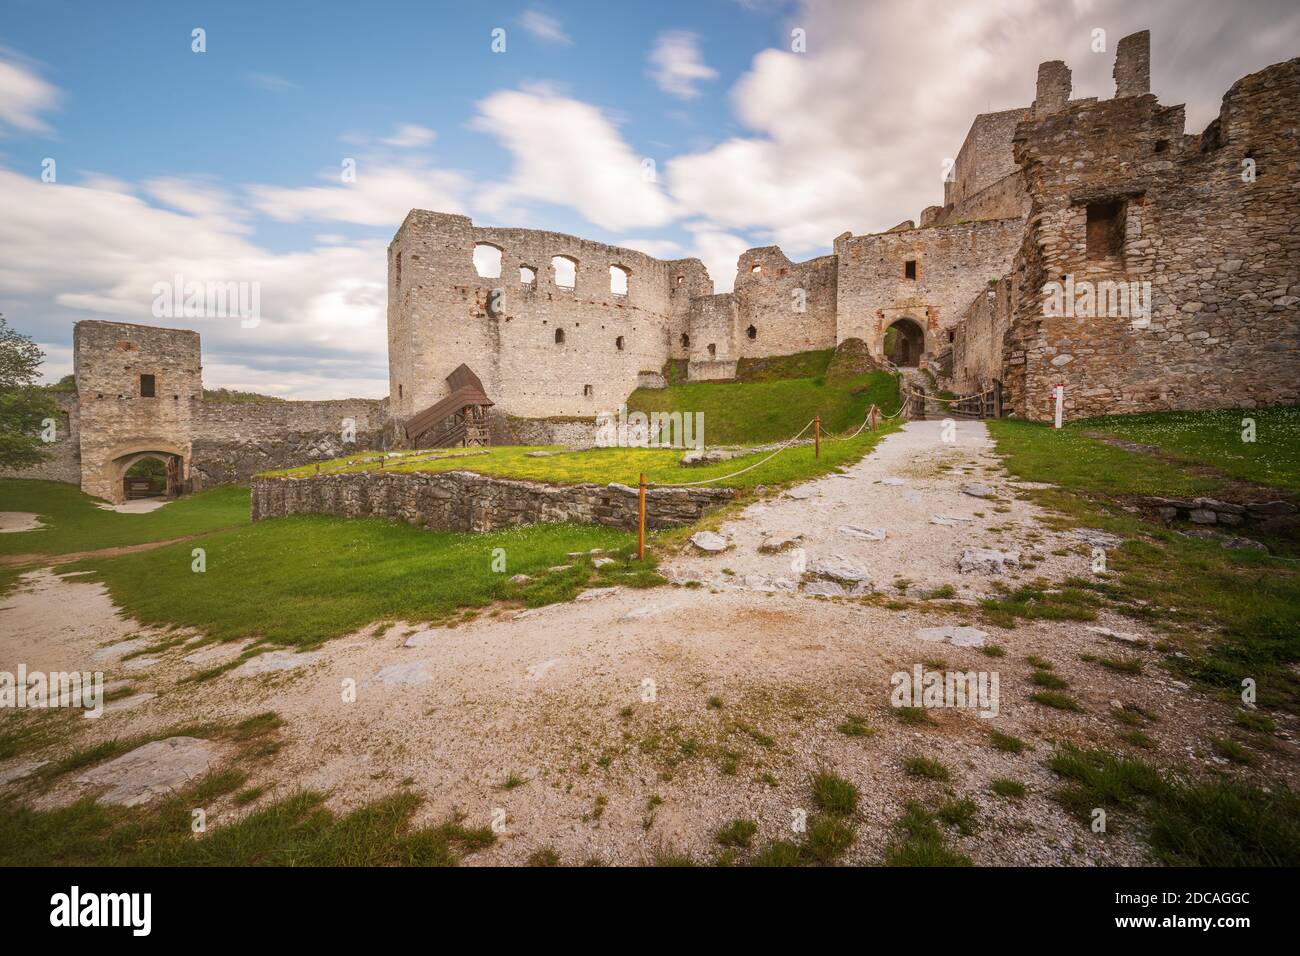 Castle Rabi in the Klatovy district eight kilometers northeast of Susice Stock Photo